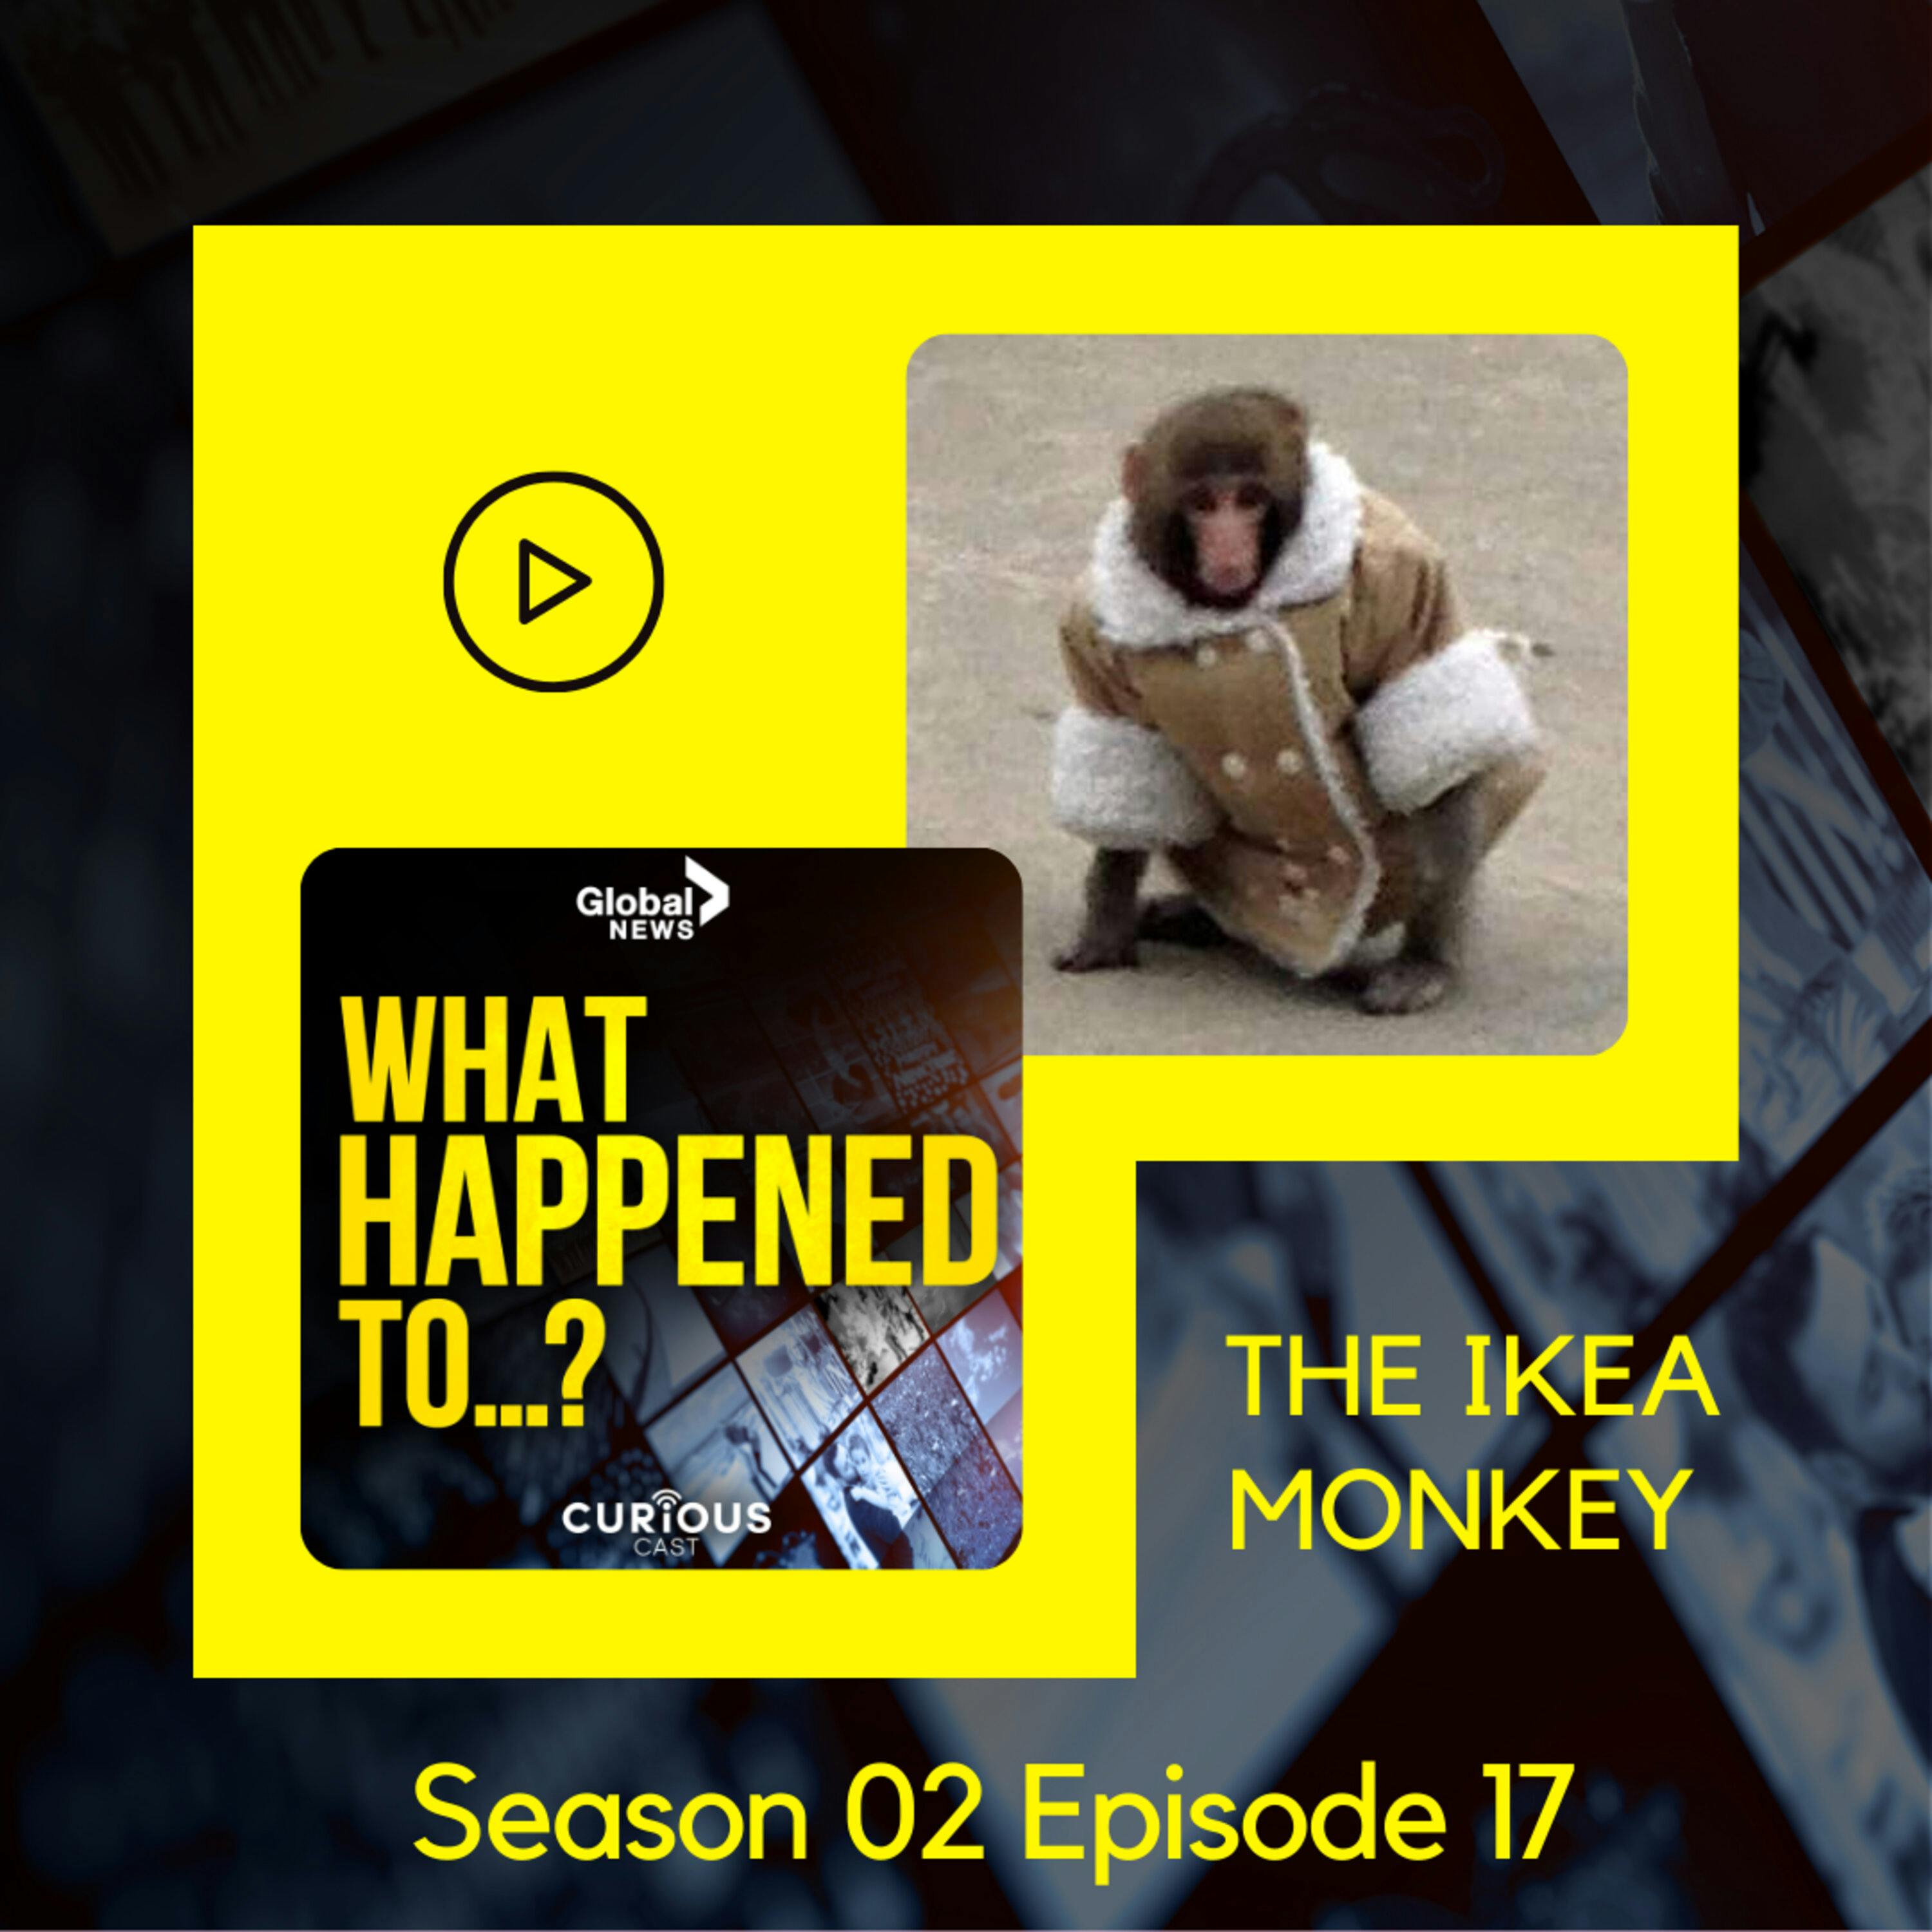 The IKEA Monkey  | 10